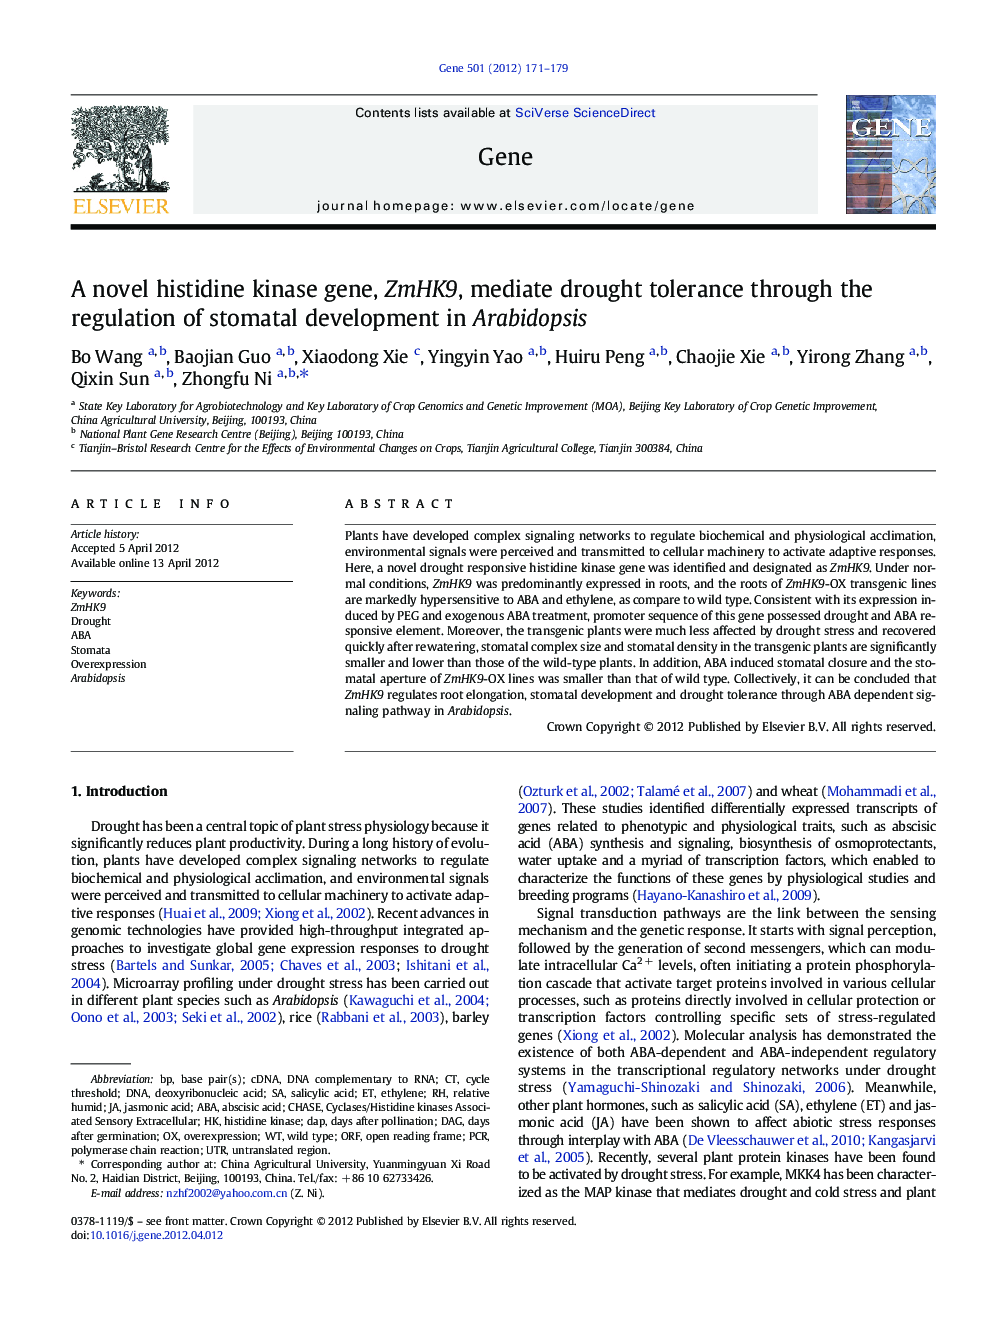 A novel histidine kinase gene, ZmHK9, mediate drought tolerance through the regulation of stomatal development in Arabidopsis